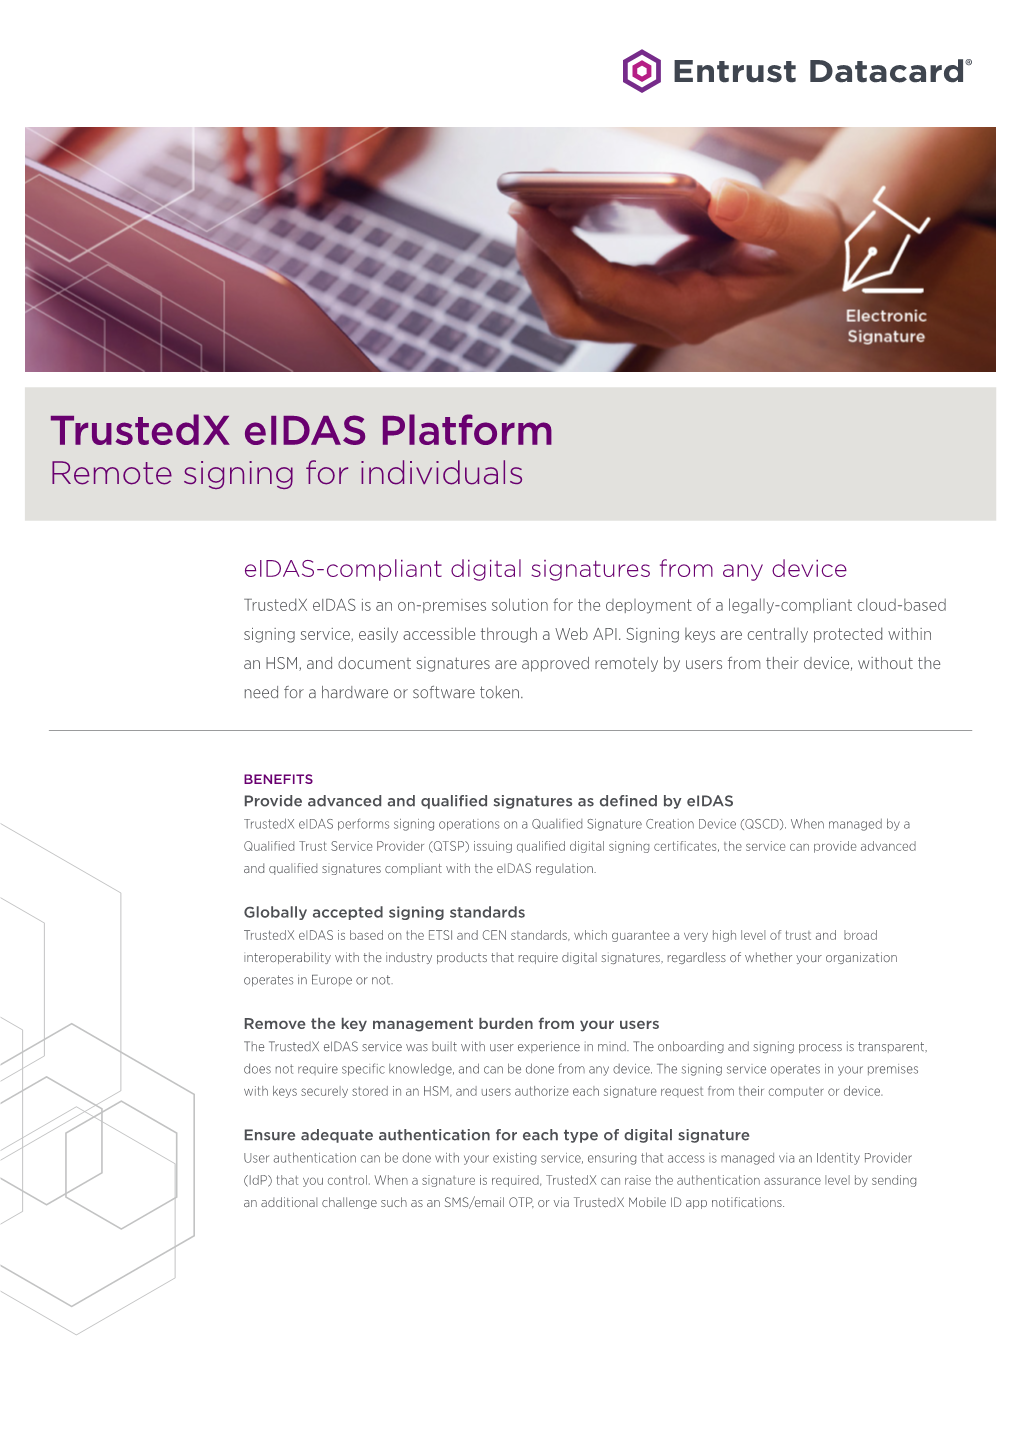 Trustedx Eidas Platform Remote Signing for Individuals